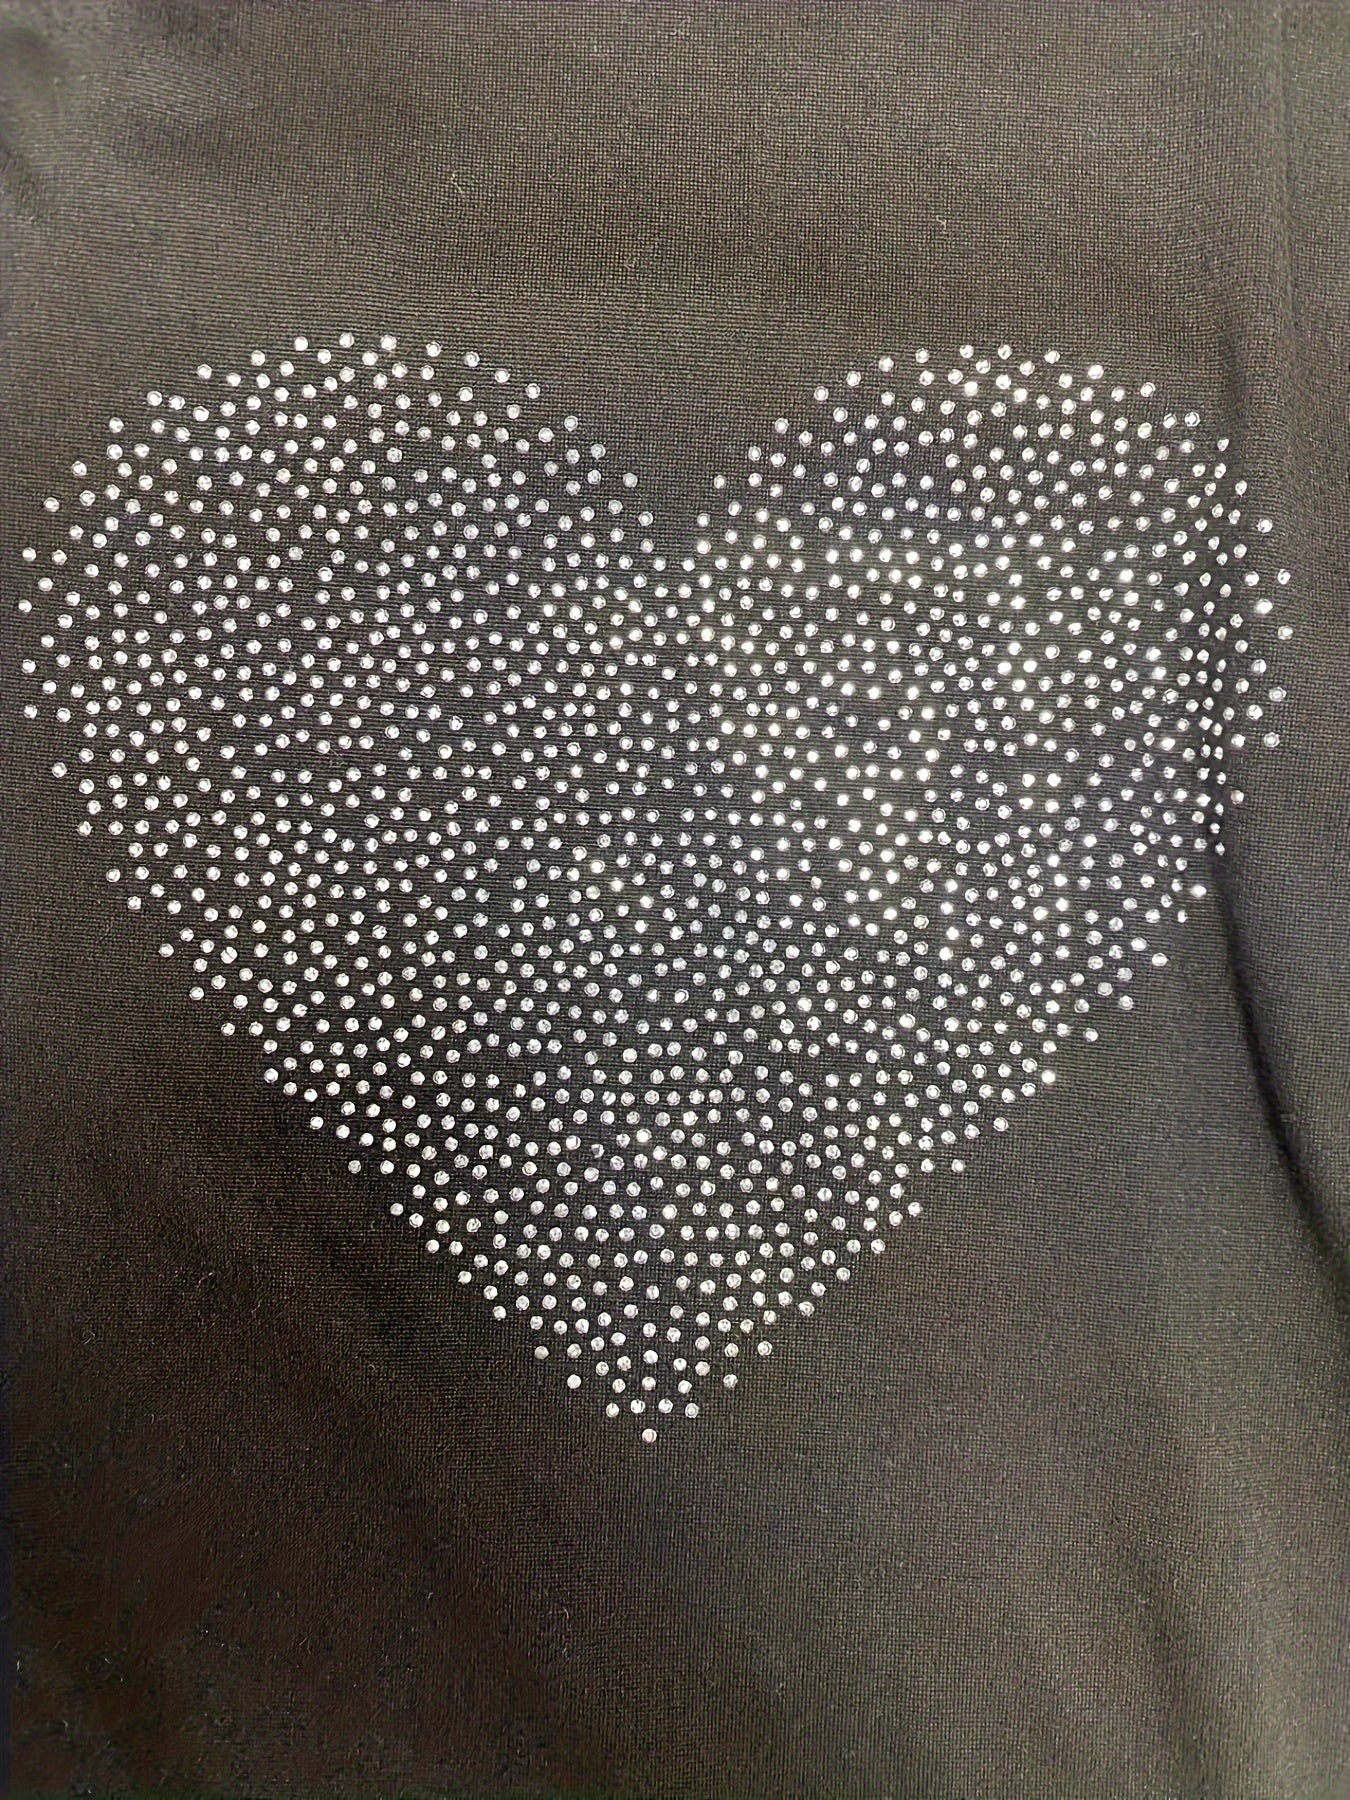 Rhinestone Heart Pattern T-shirt, Casual Mock Neck Long Sleeve T-shirt, Women's Clothing